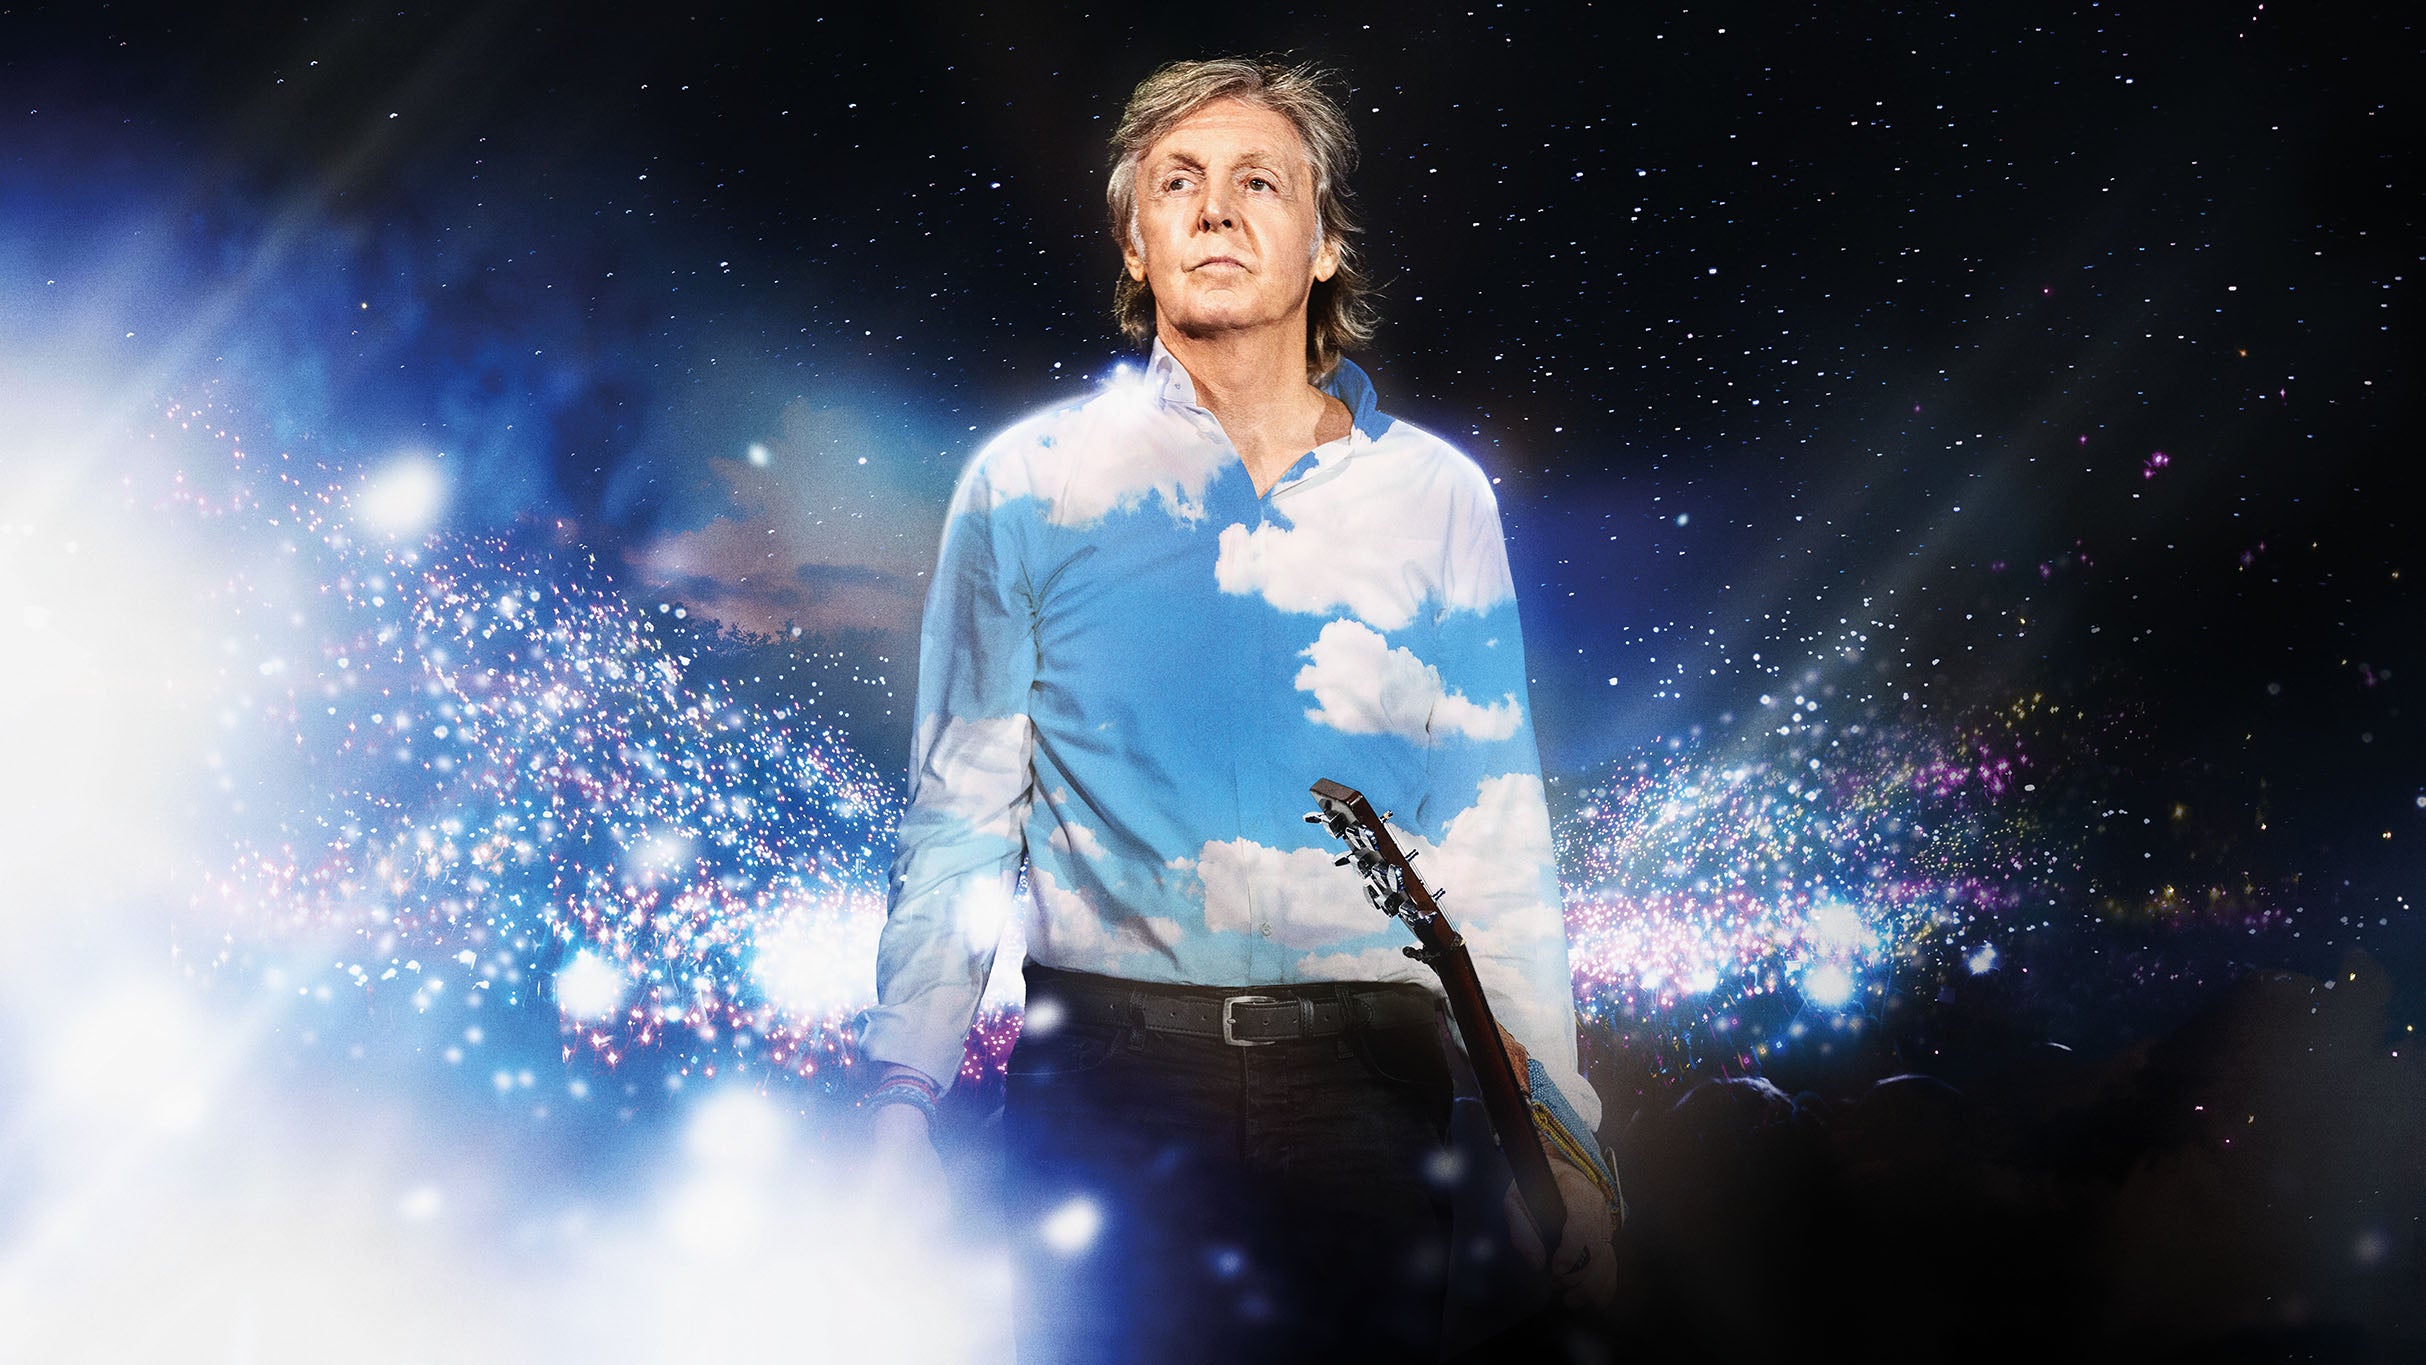 Paul McCartney | Got Back 2023 in Docklands promo photo for PM.com presale offer code